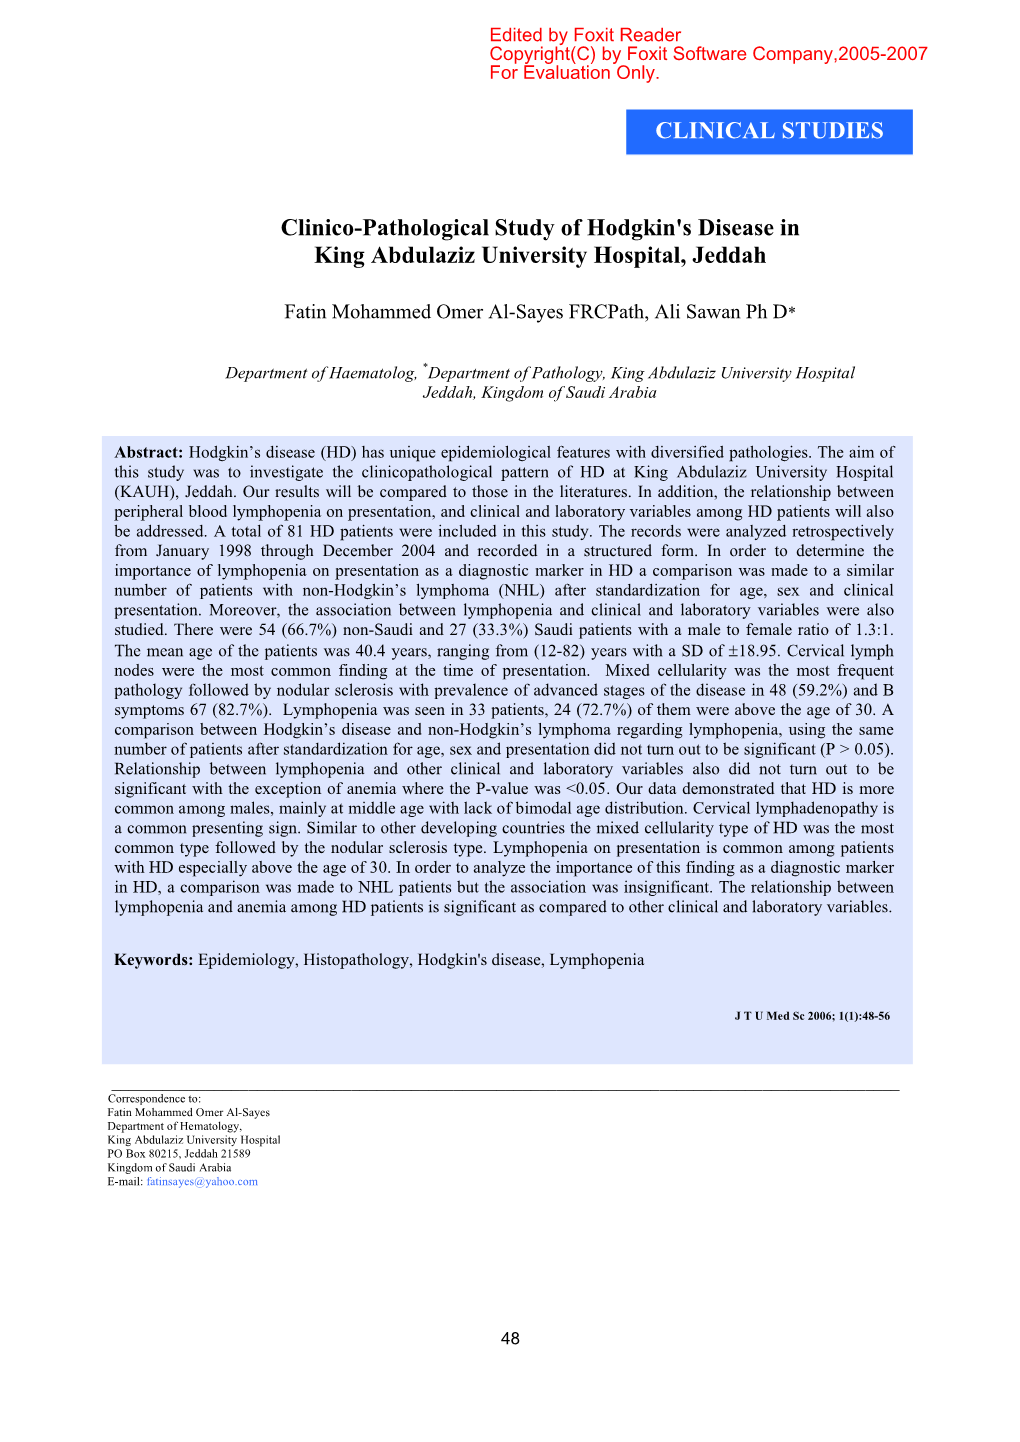 Clinico-Pathological Study of Hodgkin's Disease in King Abdulaziz University Hospital, Jeddah